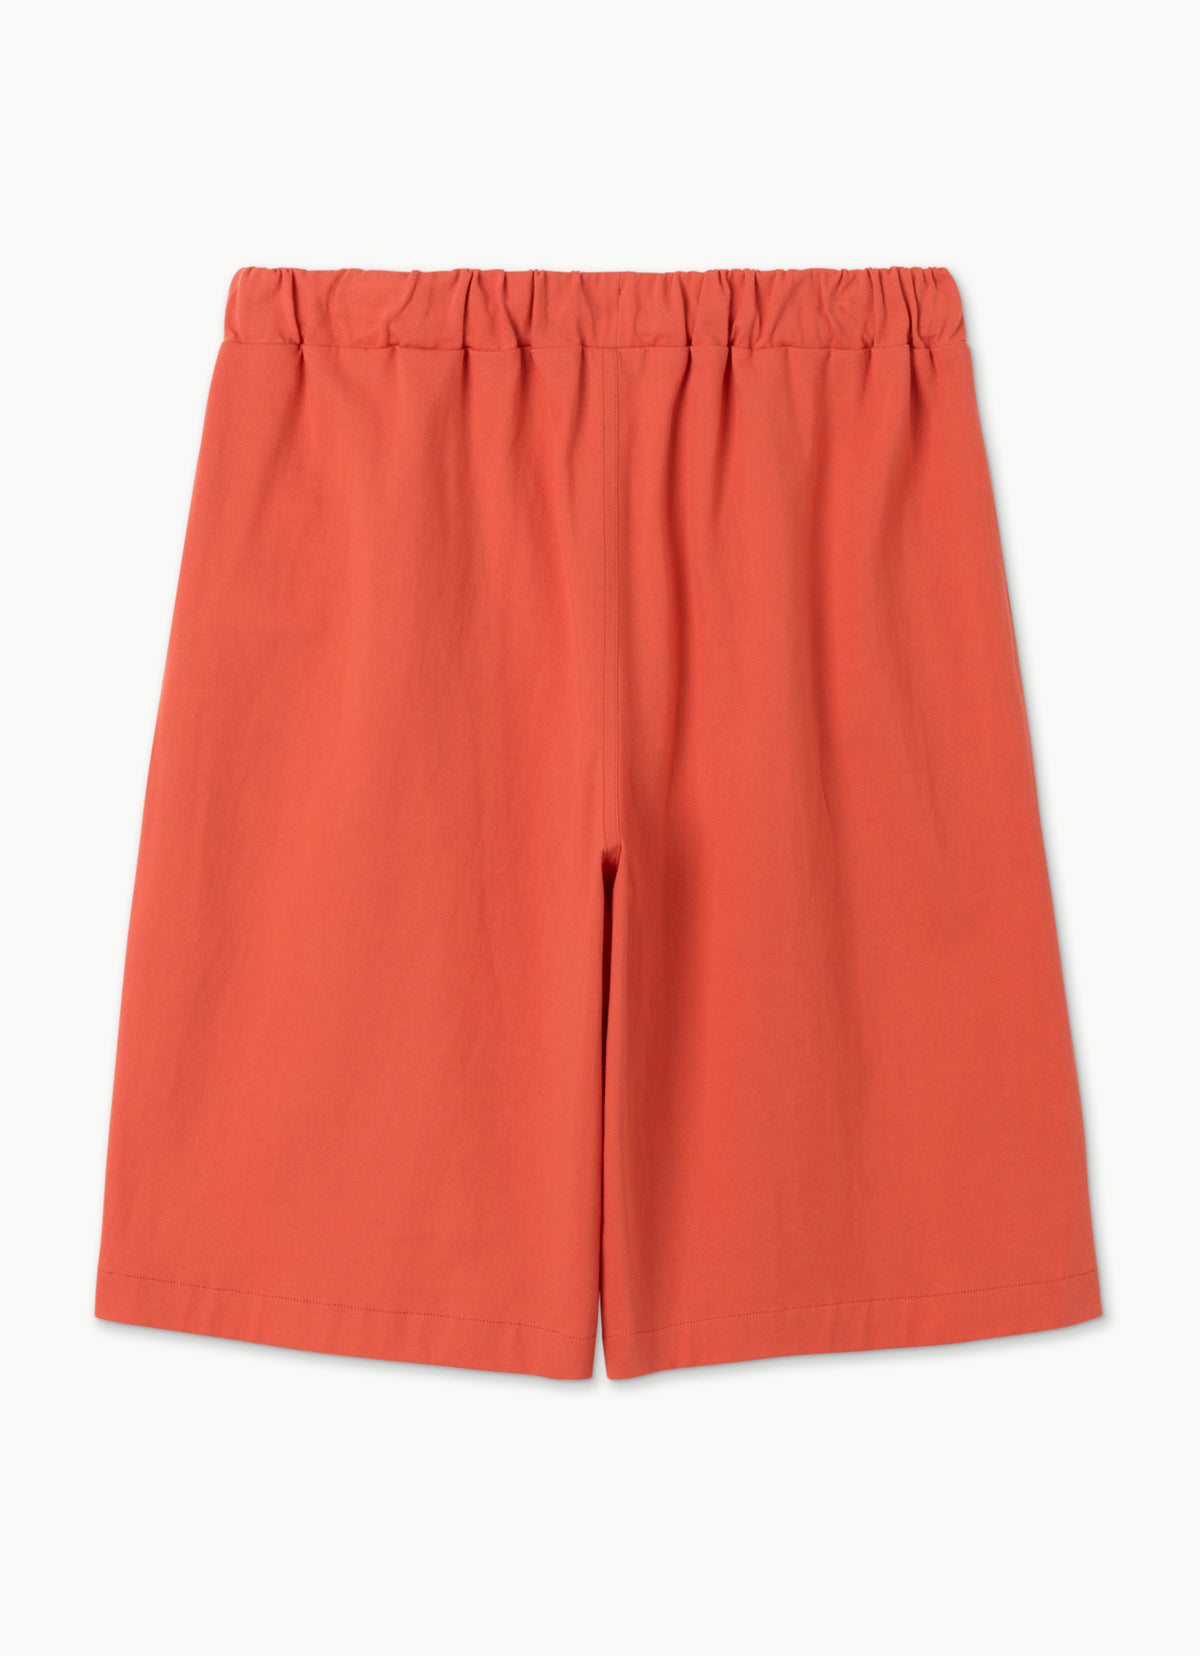 Topi bermuda pants (For Men)_Vintage Red